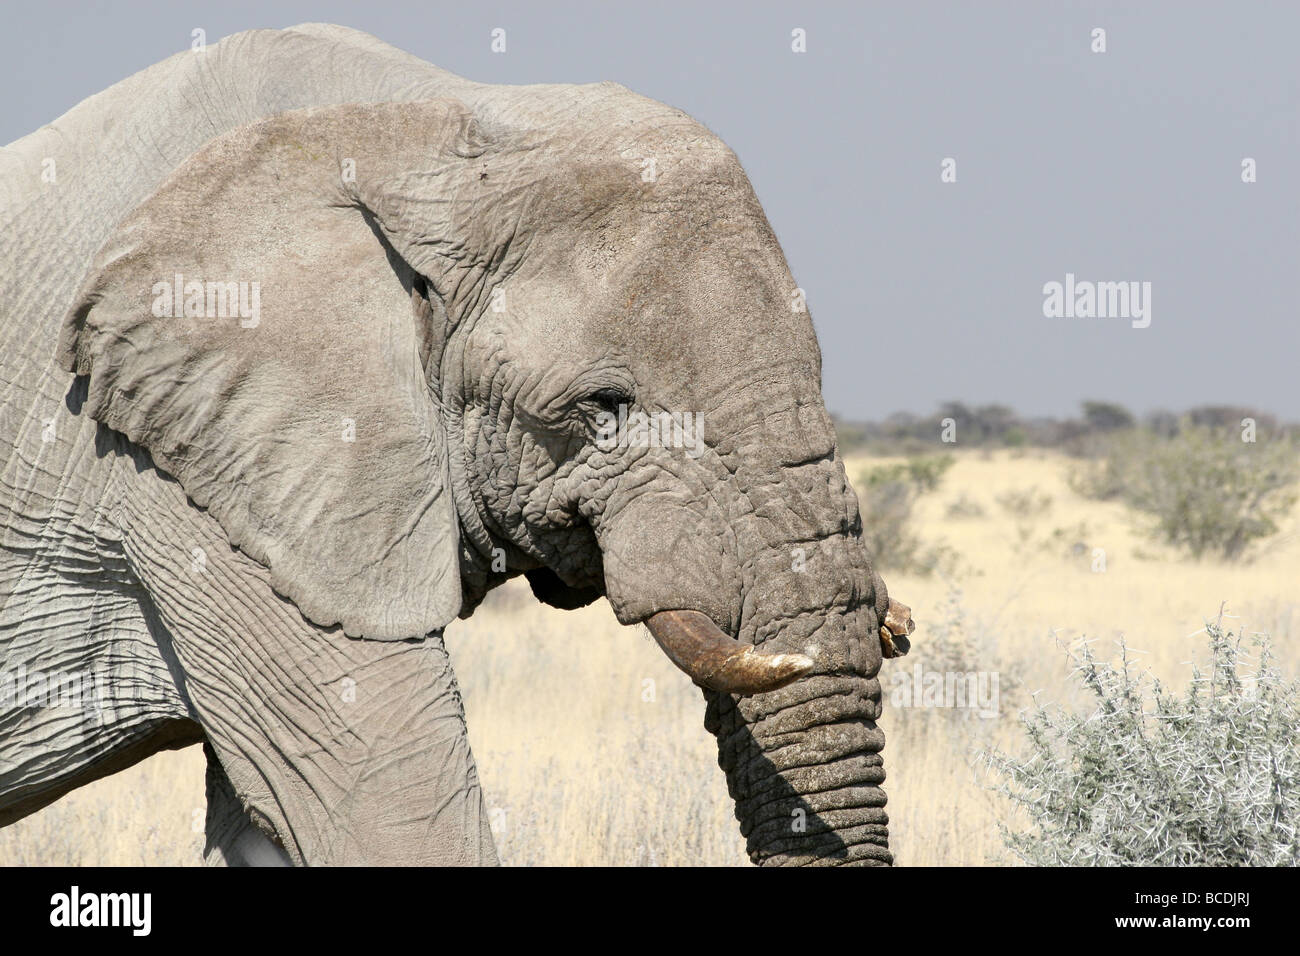 Enge, von Bull afrikanische Elefant Loxodonta Africana In Etosha Nationalpark, Namibia Stockfoto